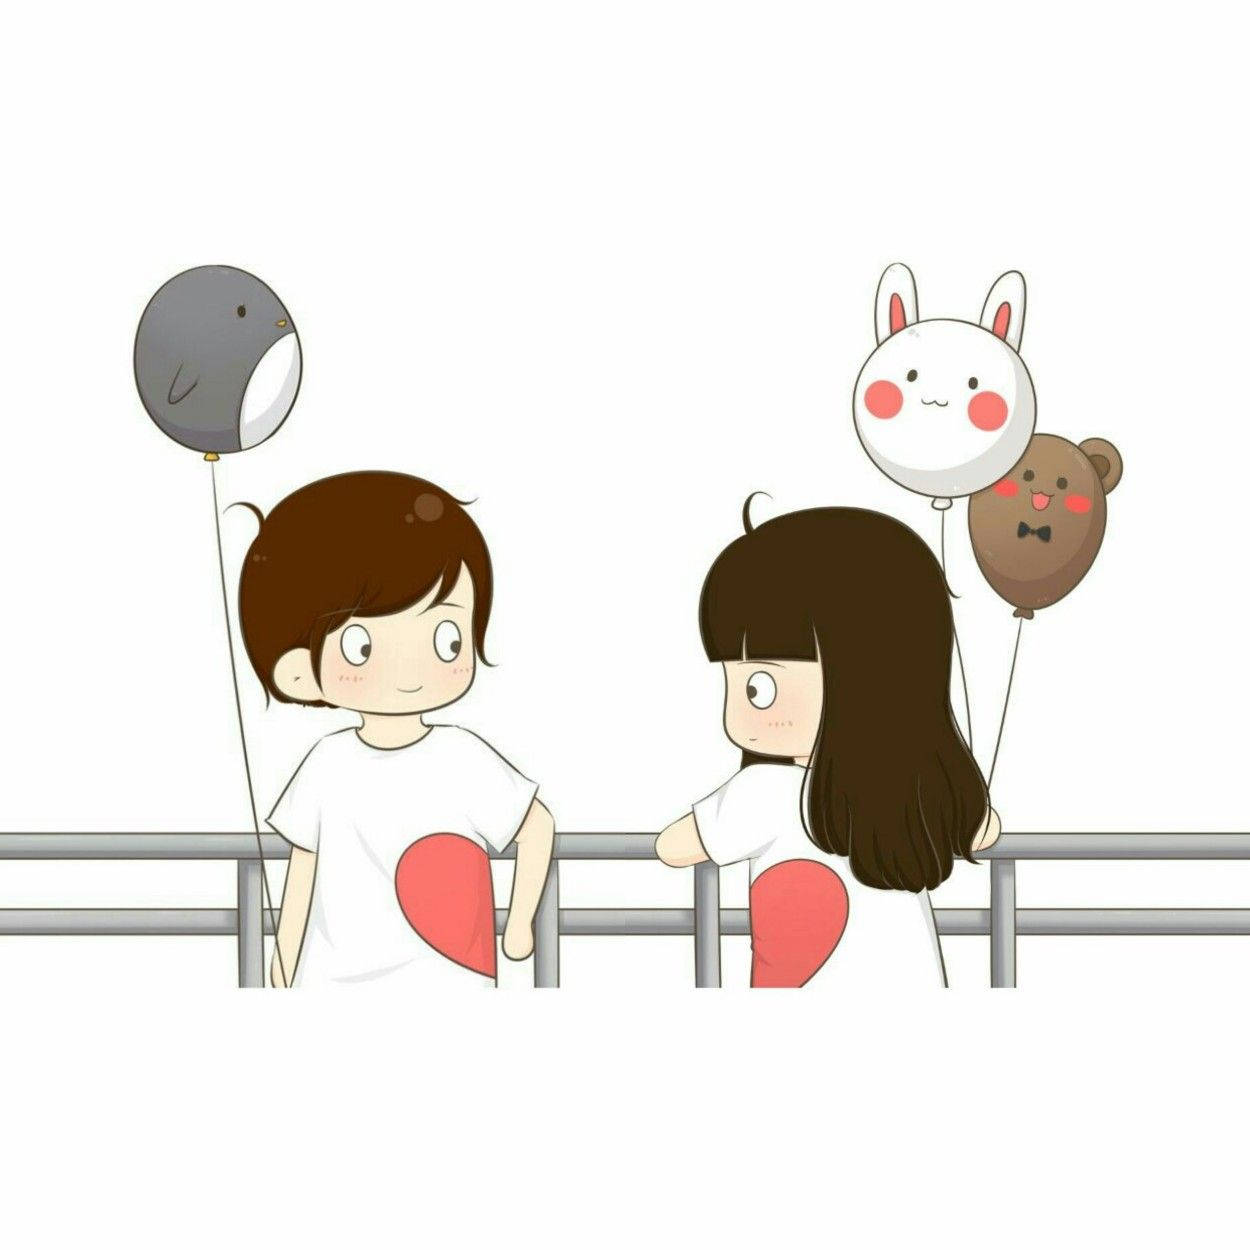 Cute Cartoon Couple Balloon Date Wallpaper